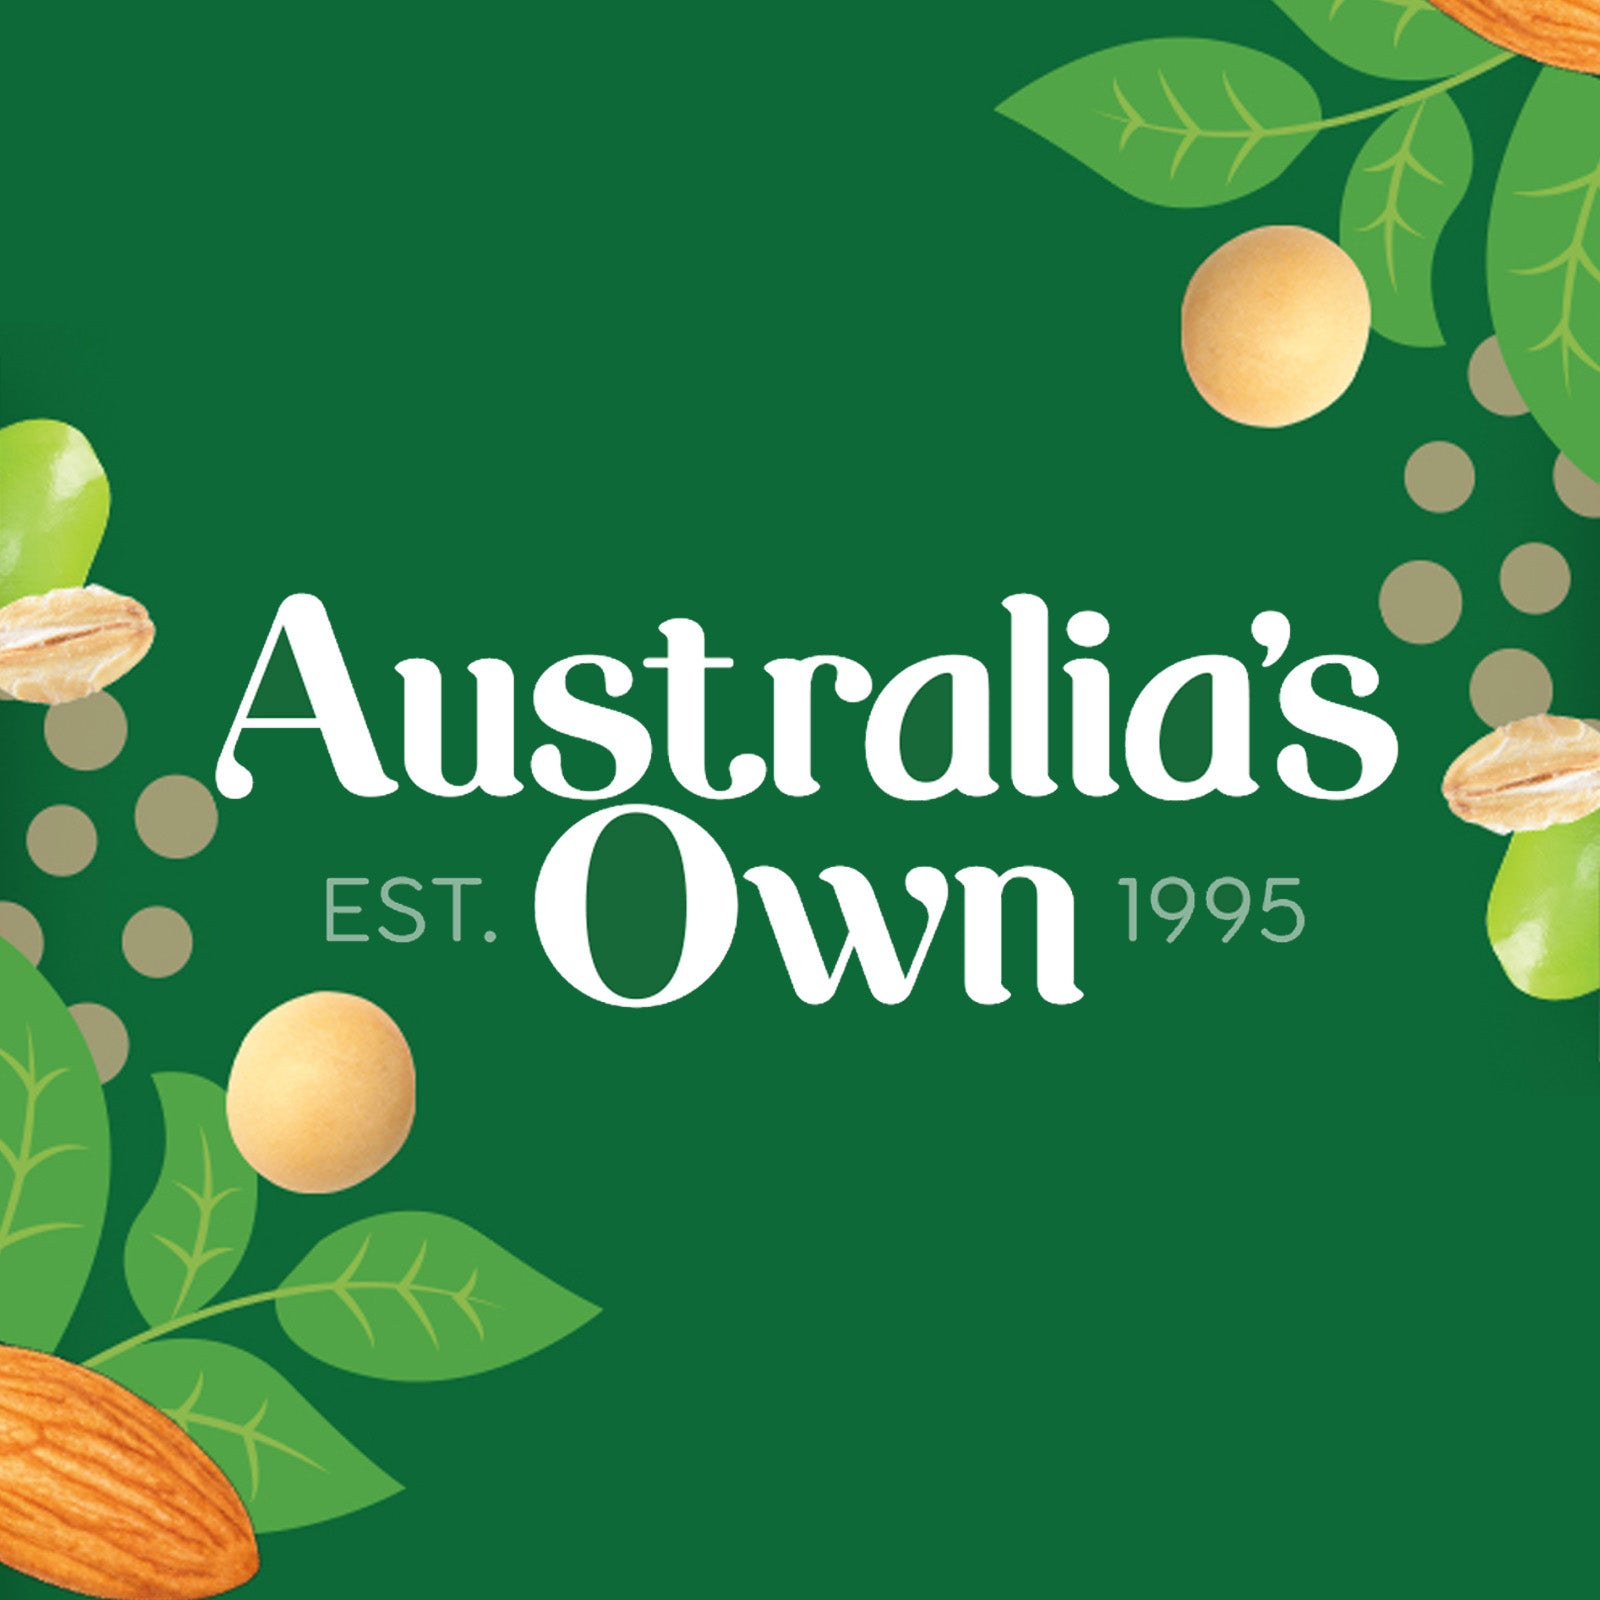 AUSTRALIA'S OWN Barista Plant Milk 1L